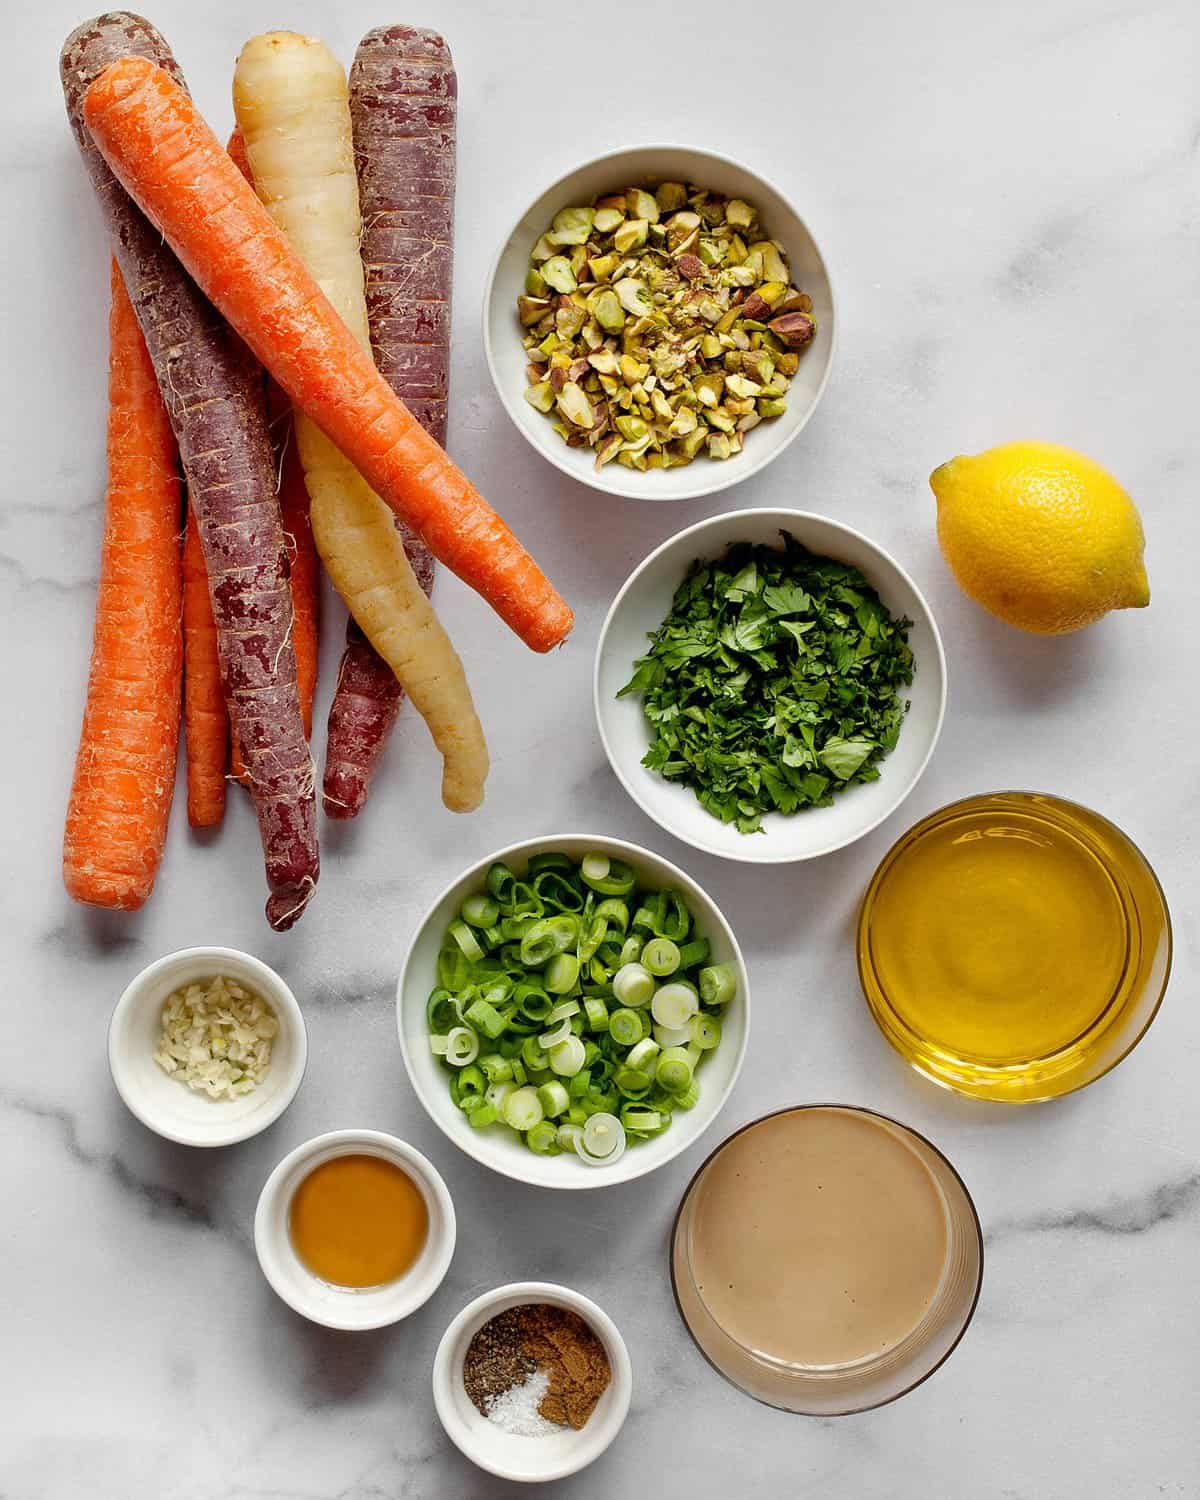 Ingredients including carrots, scallion, pistachios, lemon and olive oil.